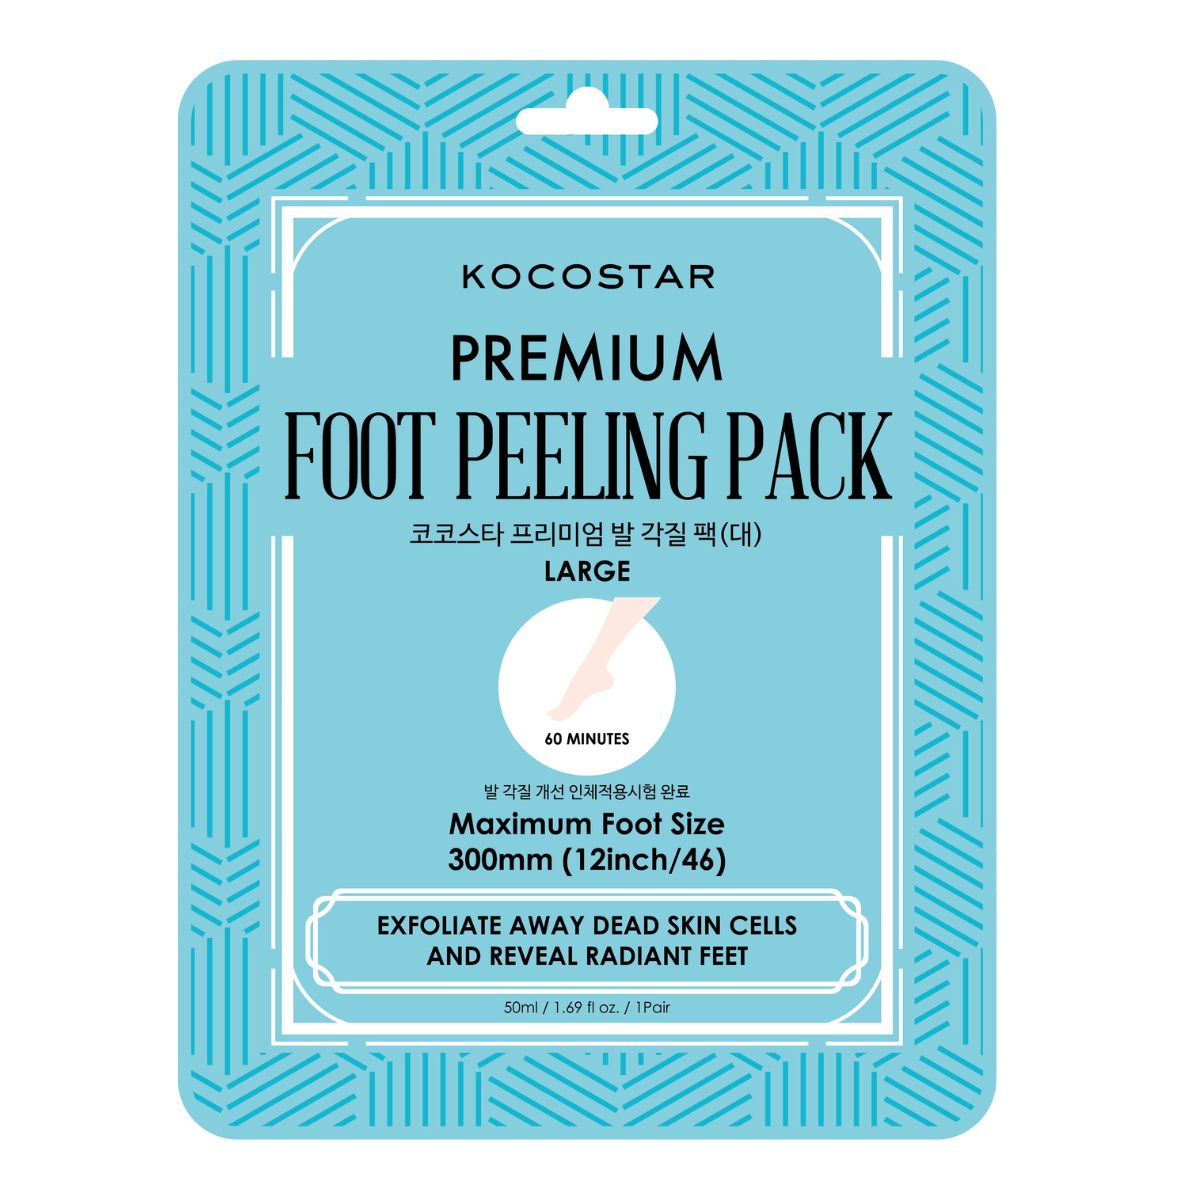 KocoStar Premium Foot Peeling Pack Large  Size 300mm(12inch/46)  50Ml